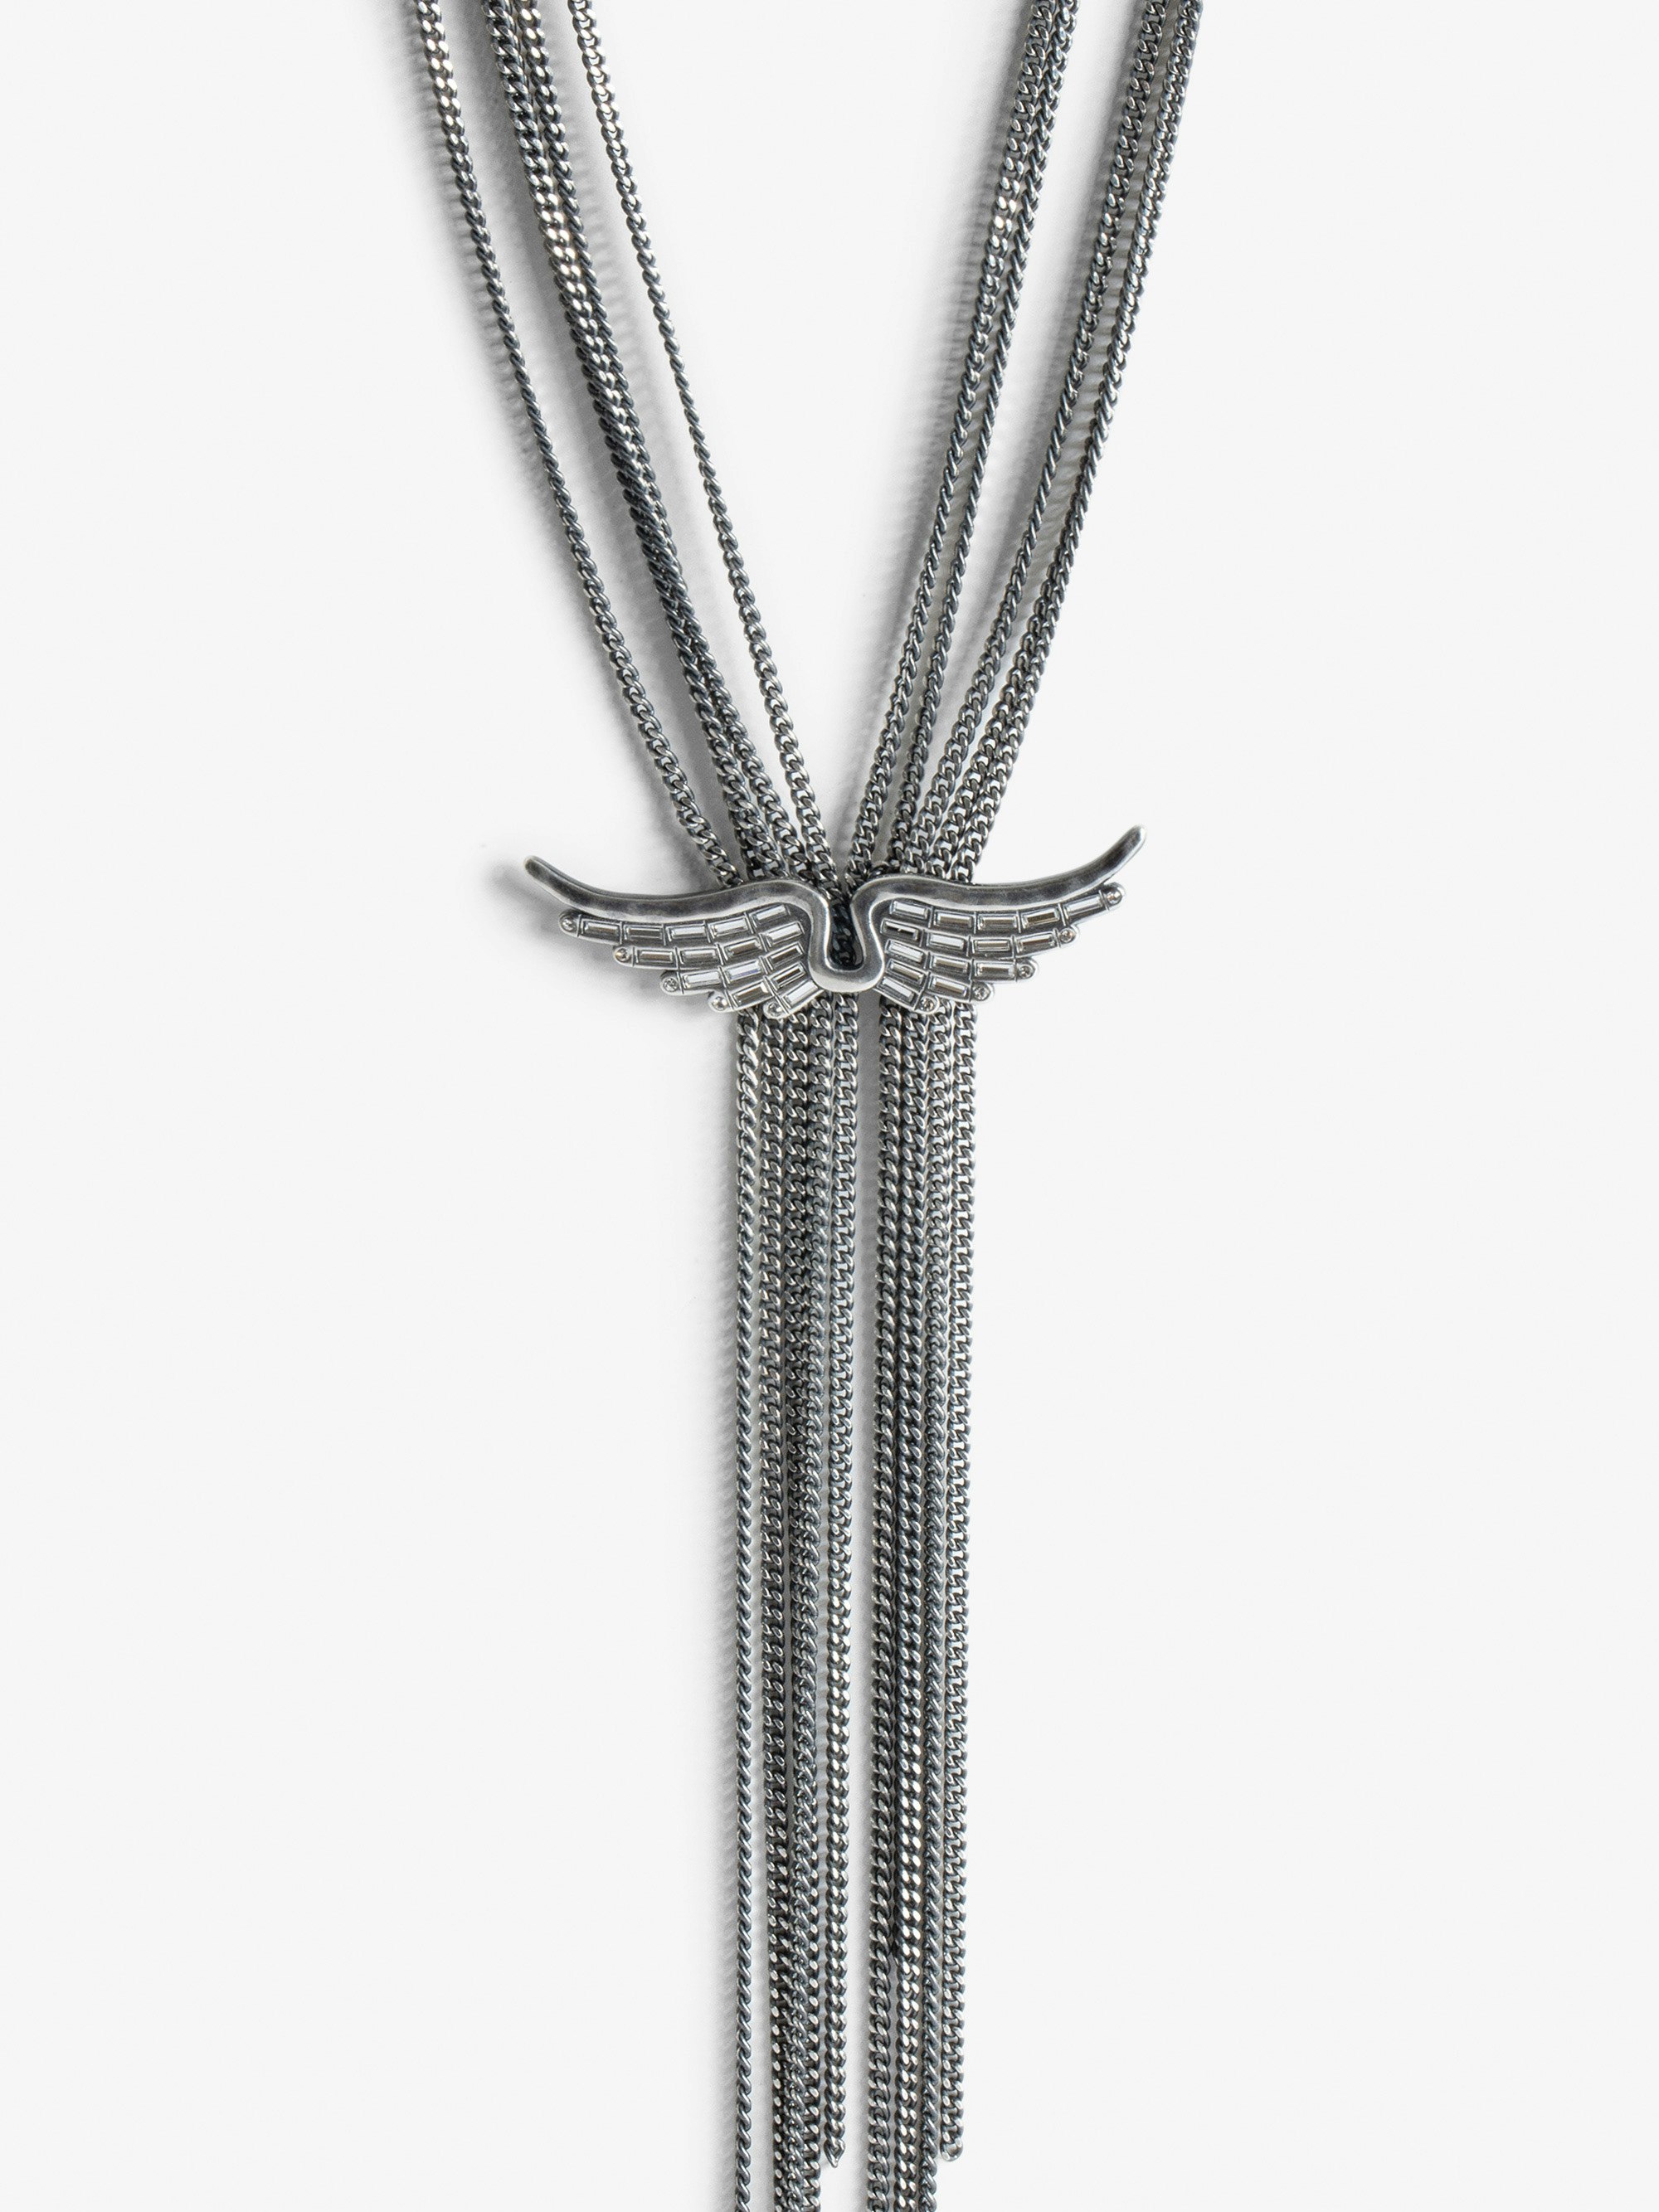 Lange Halskette Rock Star - Lange Halskette aus versilbertem Messing mit Flügel-Charm.